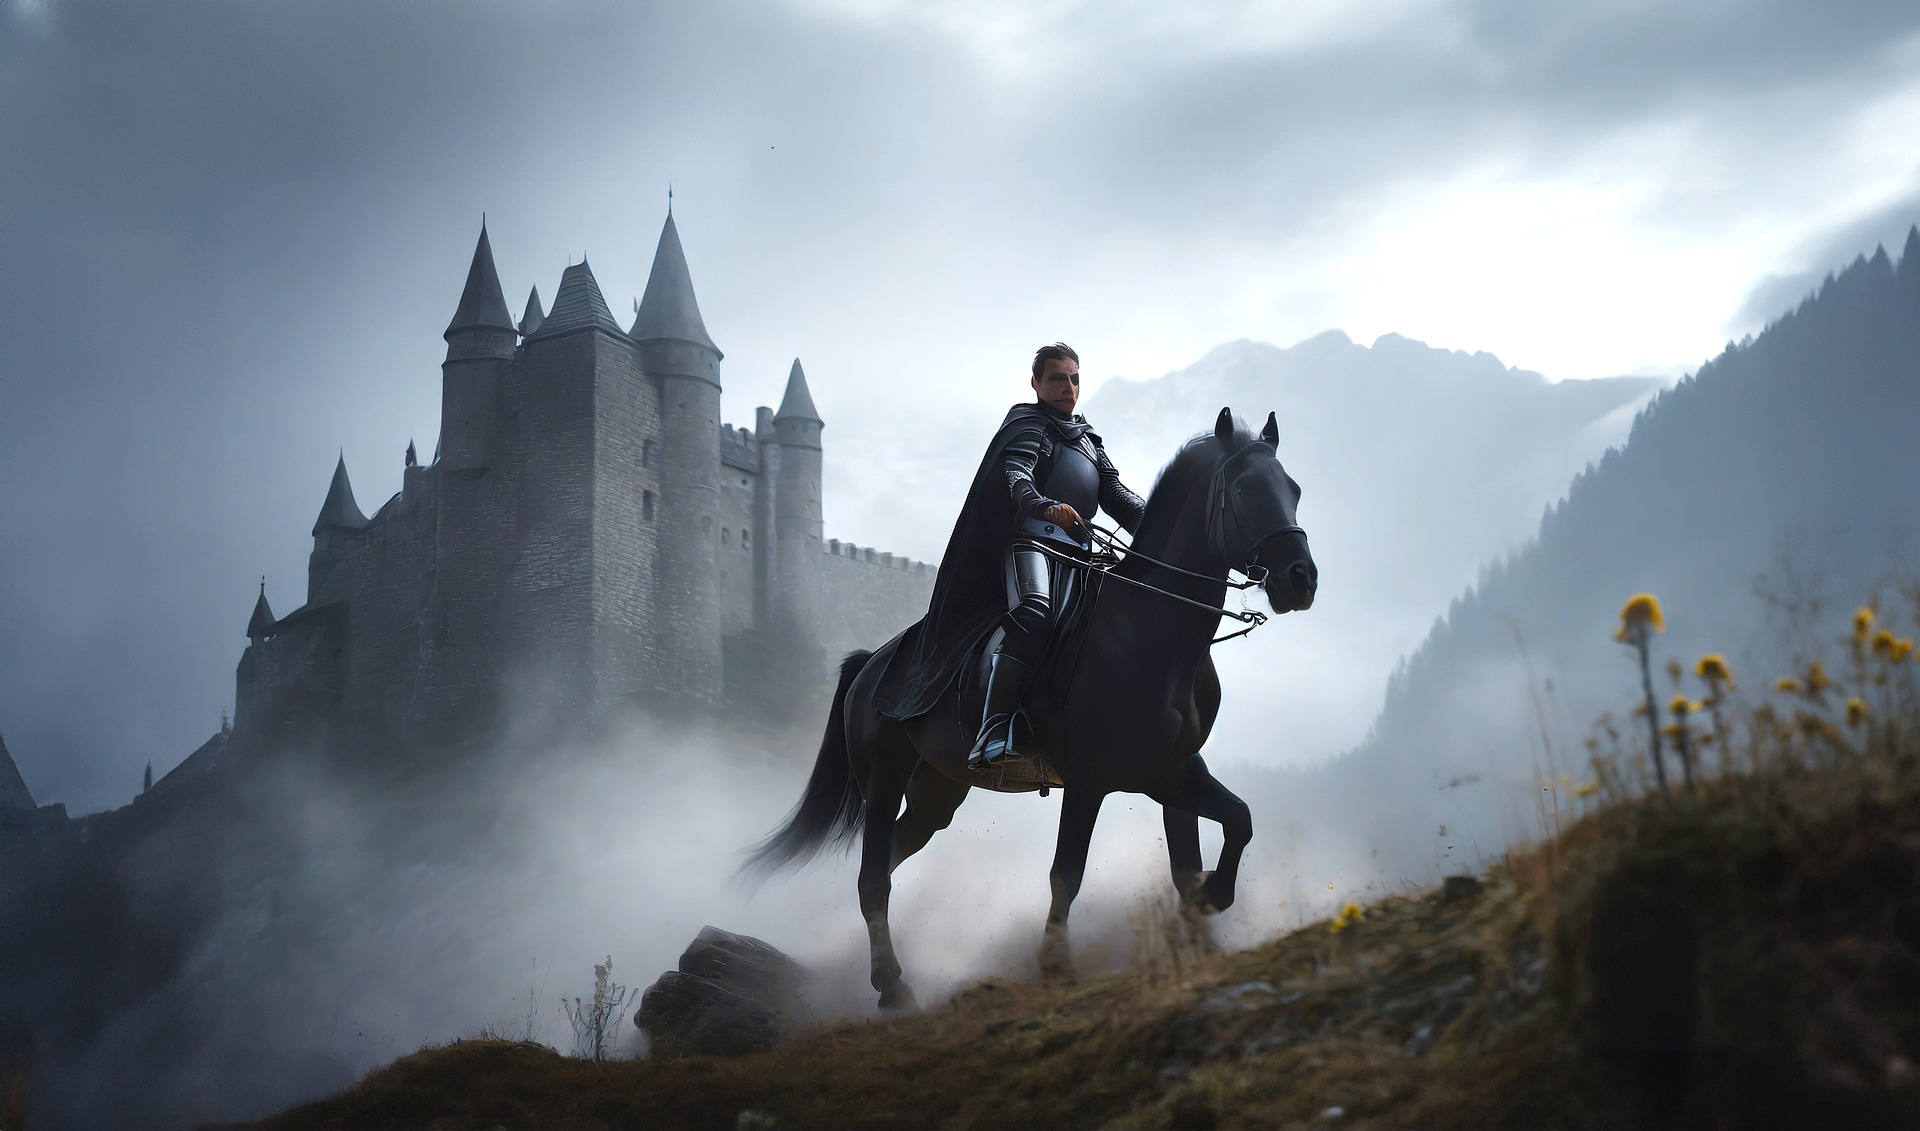 Knight on horseback during the era of feudalism